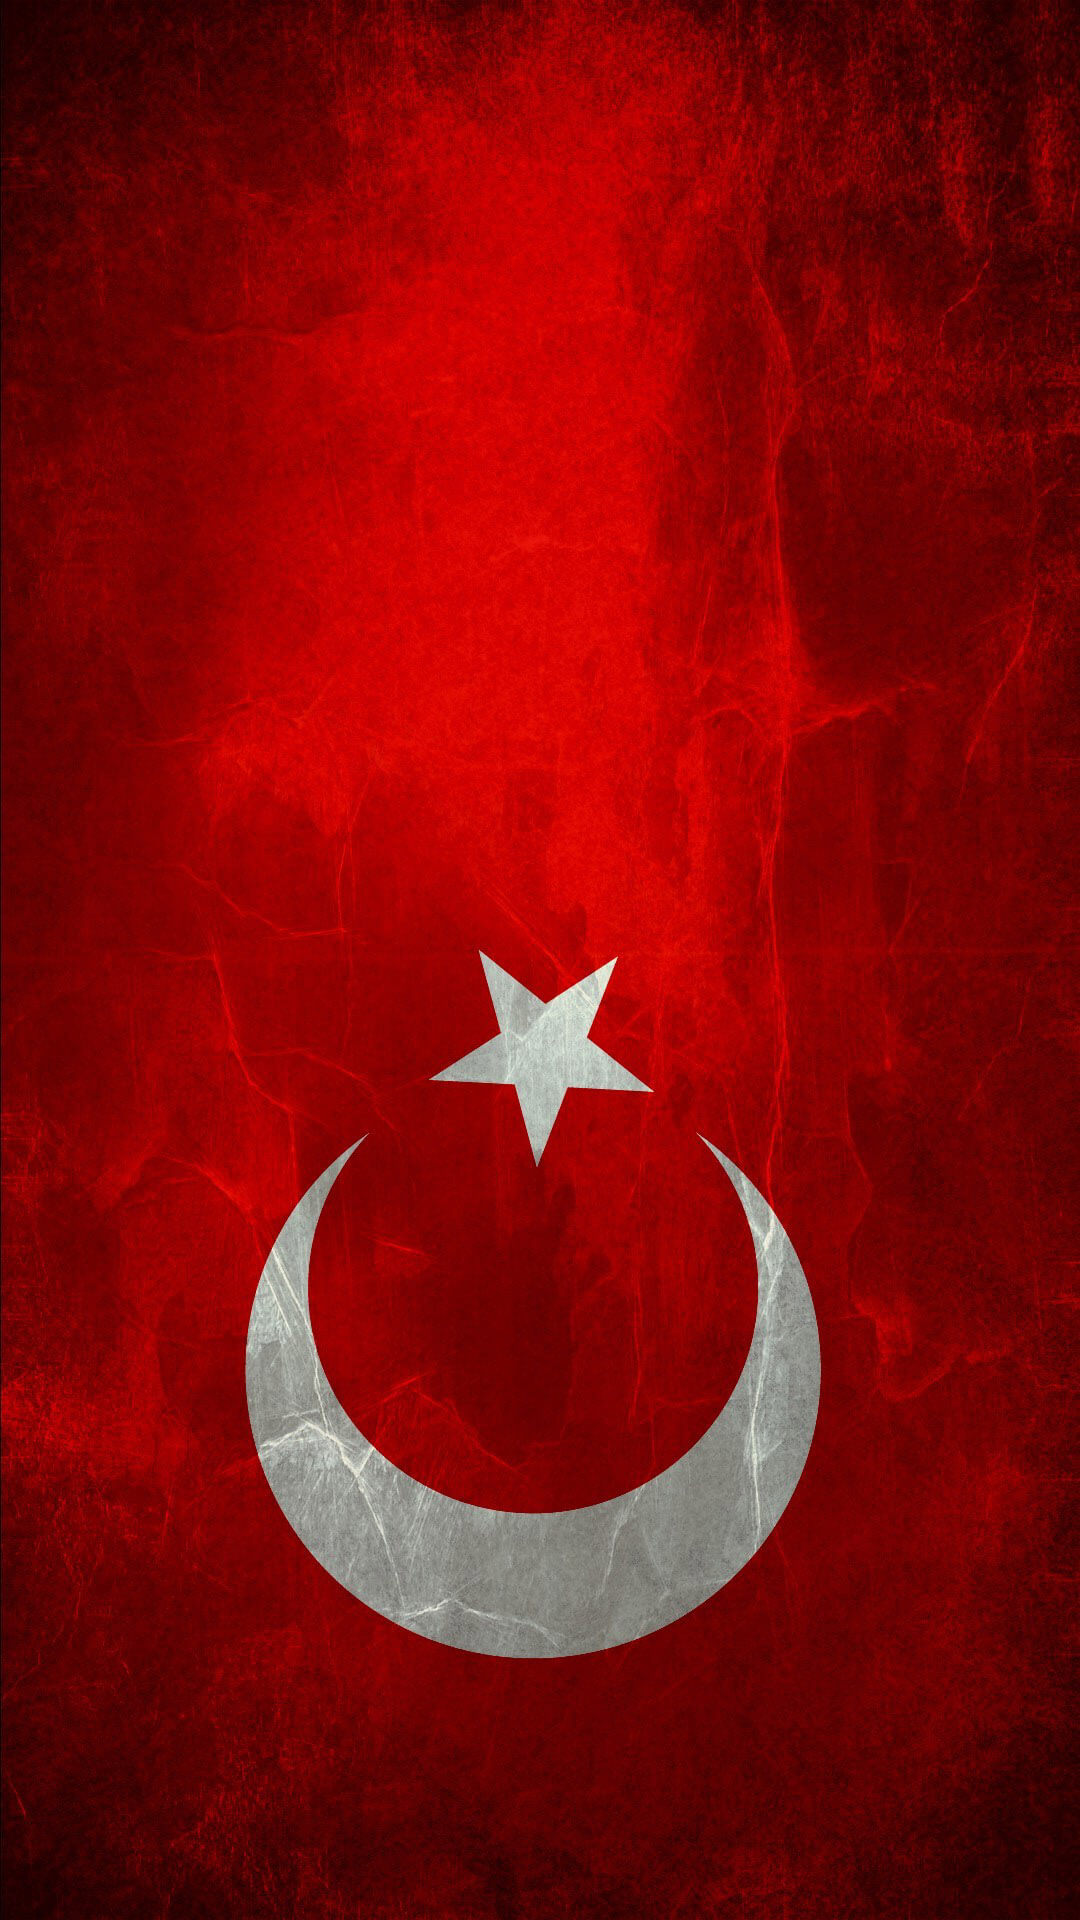 türk bayrağı wallpaper hd 3d,red,flag,illustration,crescent,symbol